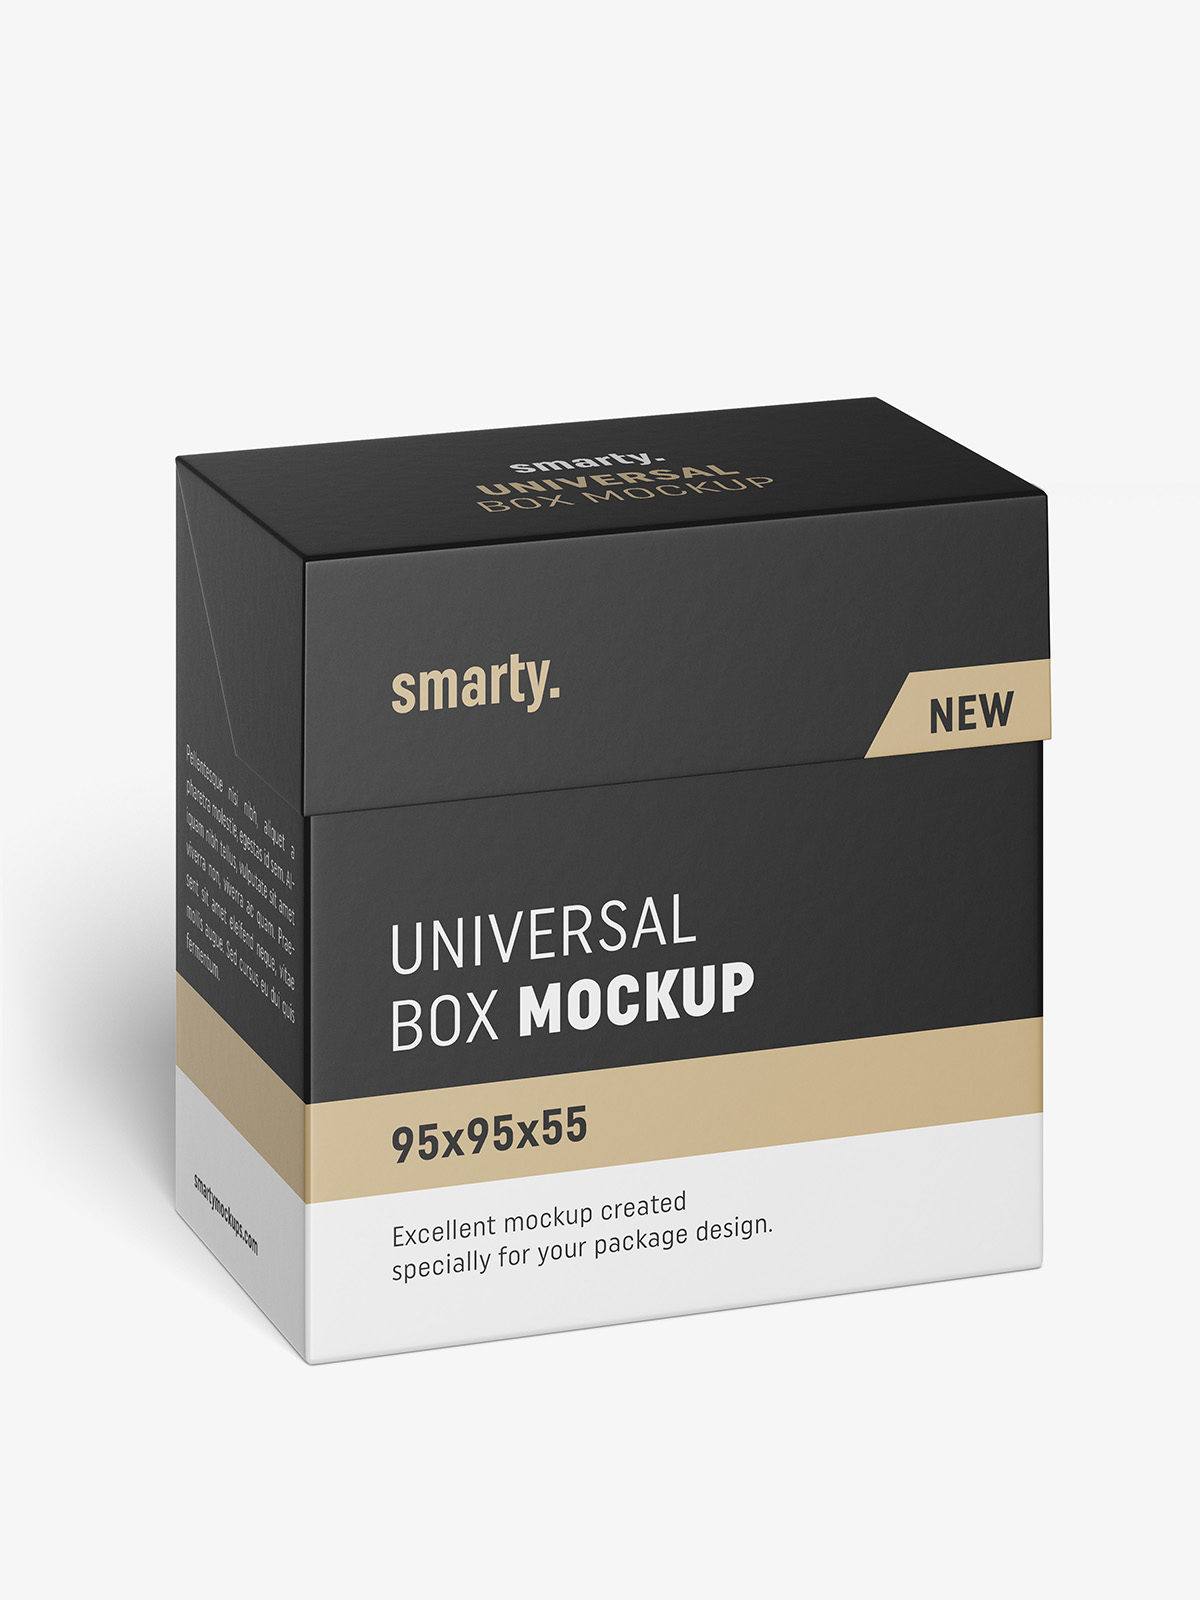 Download Tea box mockup / 95x95x55 - Smarty Mockups PSD Mockup Templates